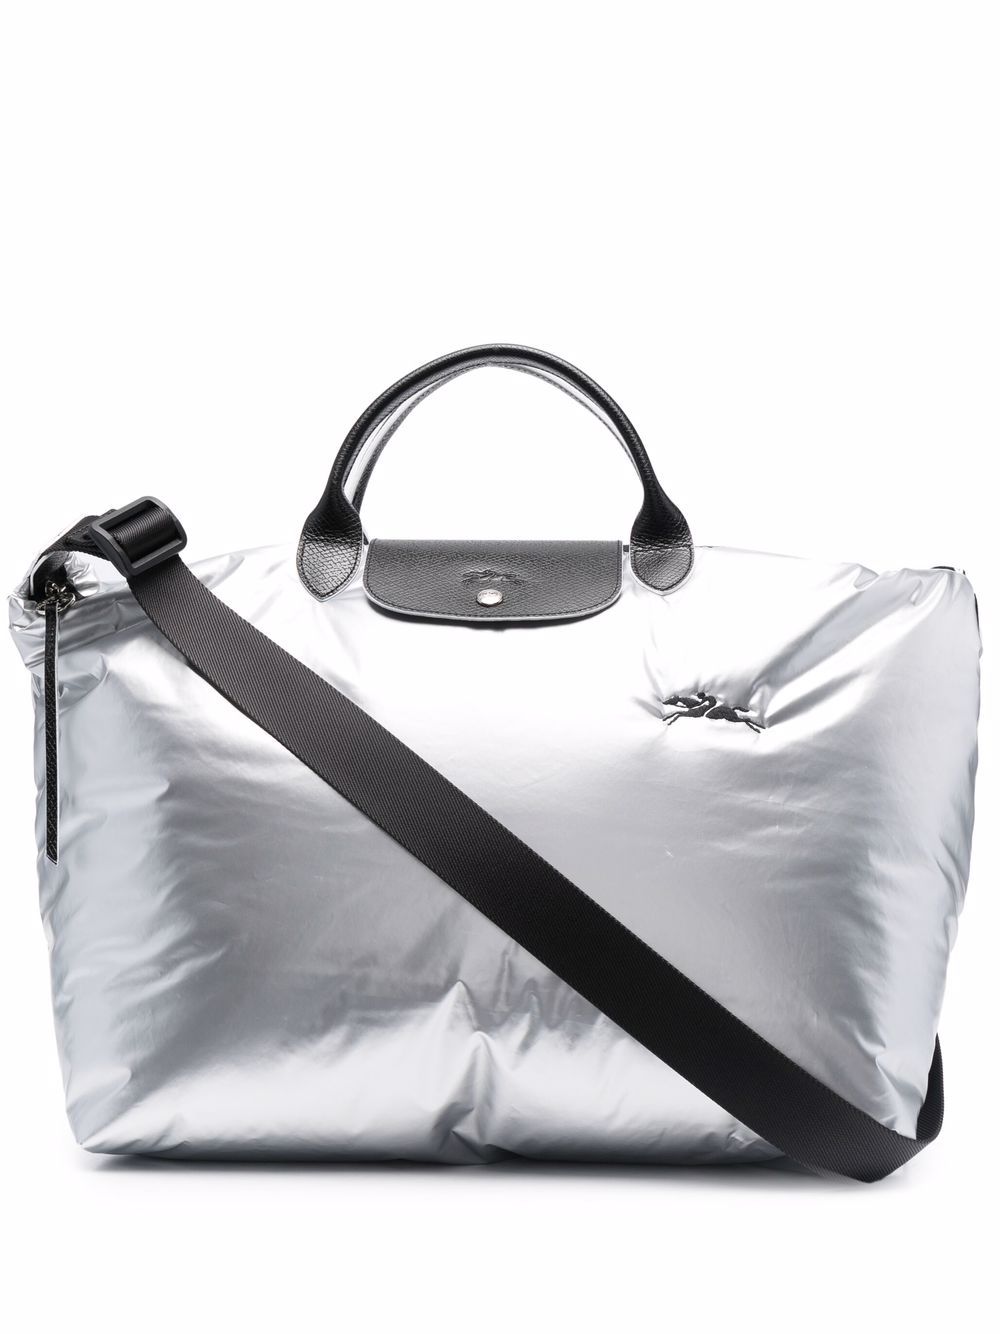 фото Longchamp дорожная сумка le pilage